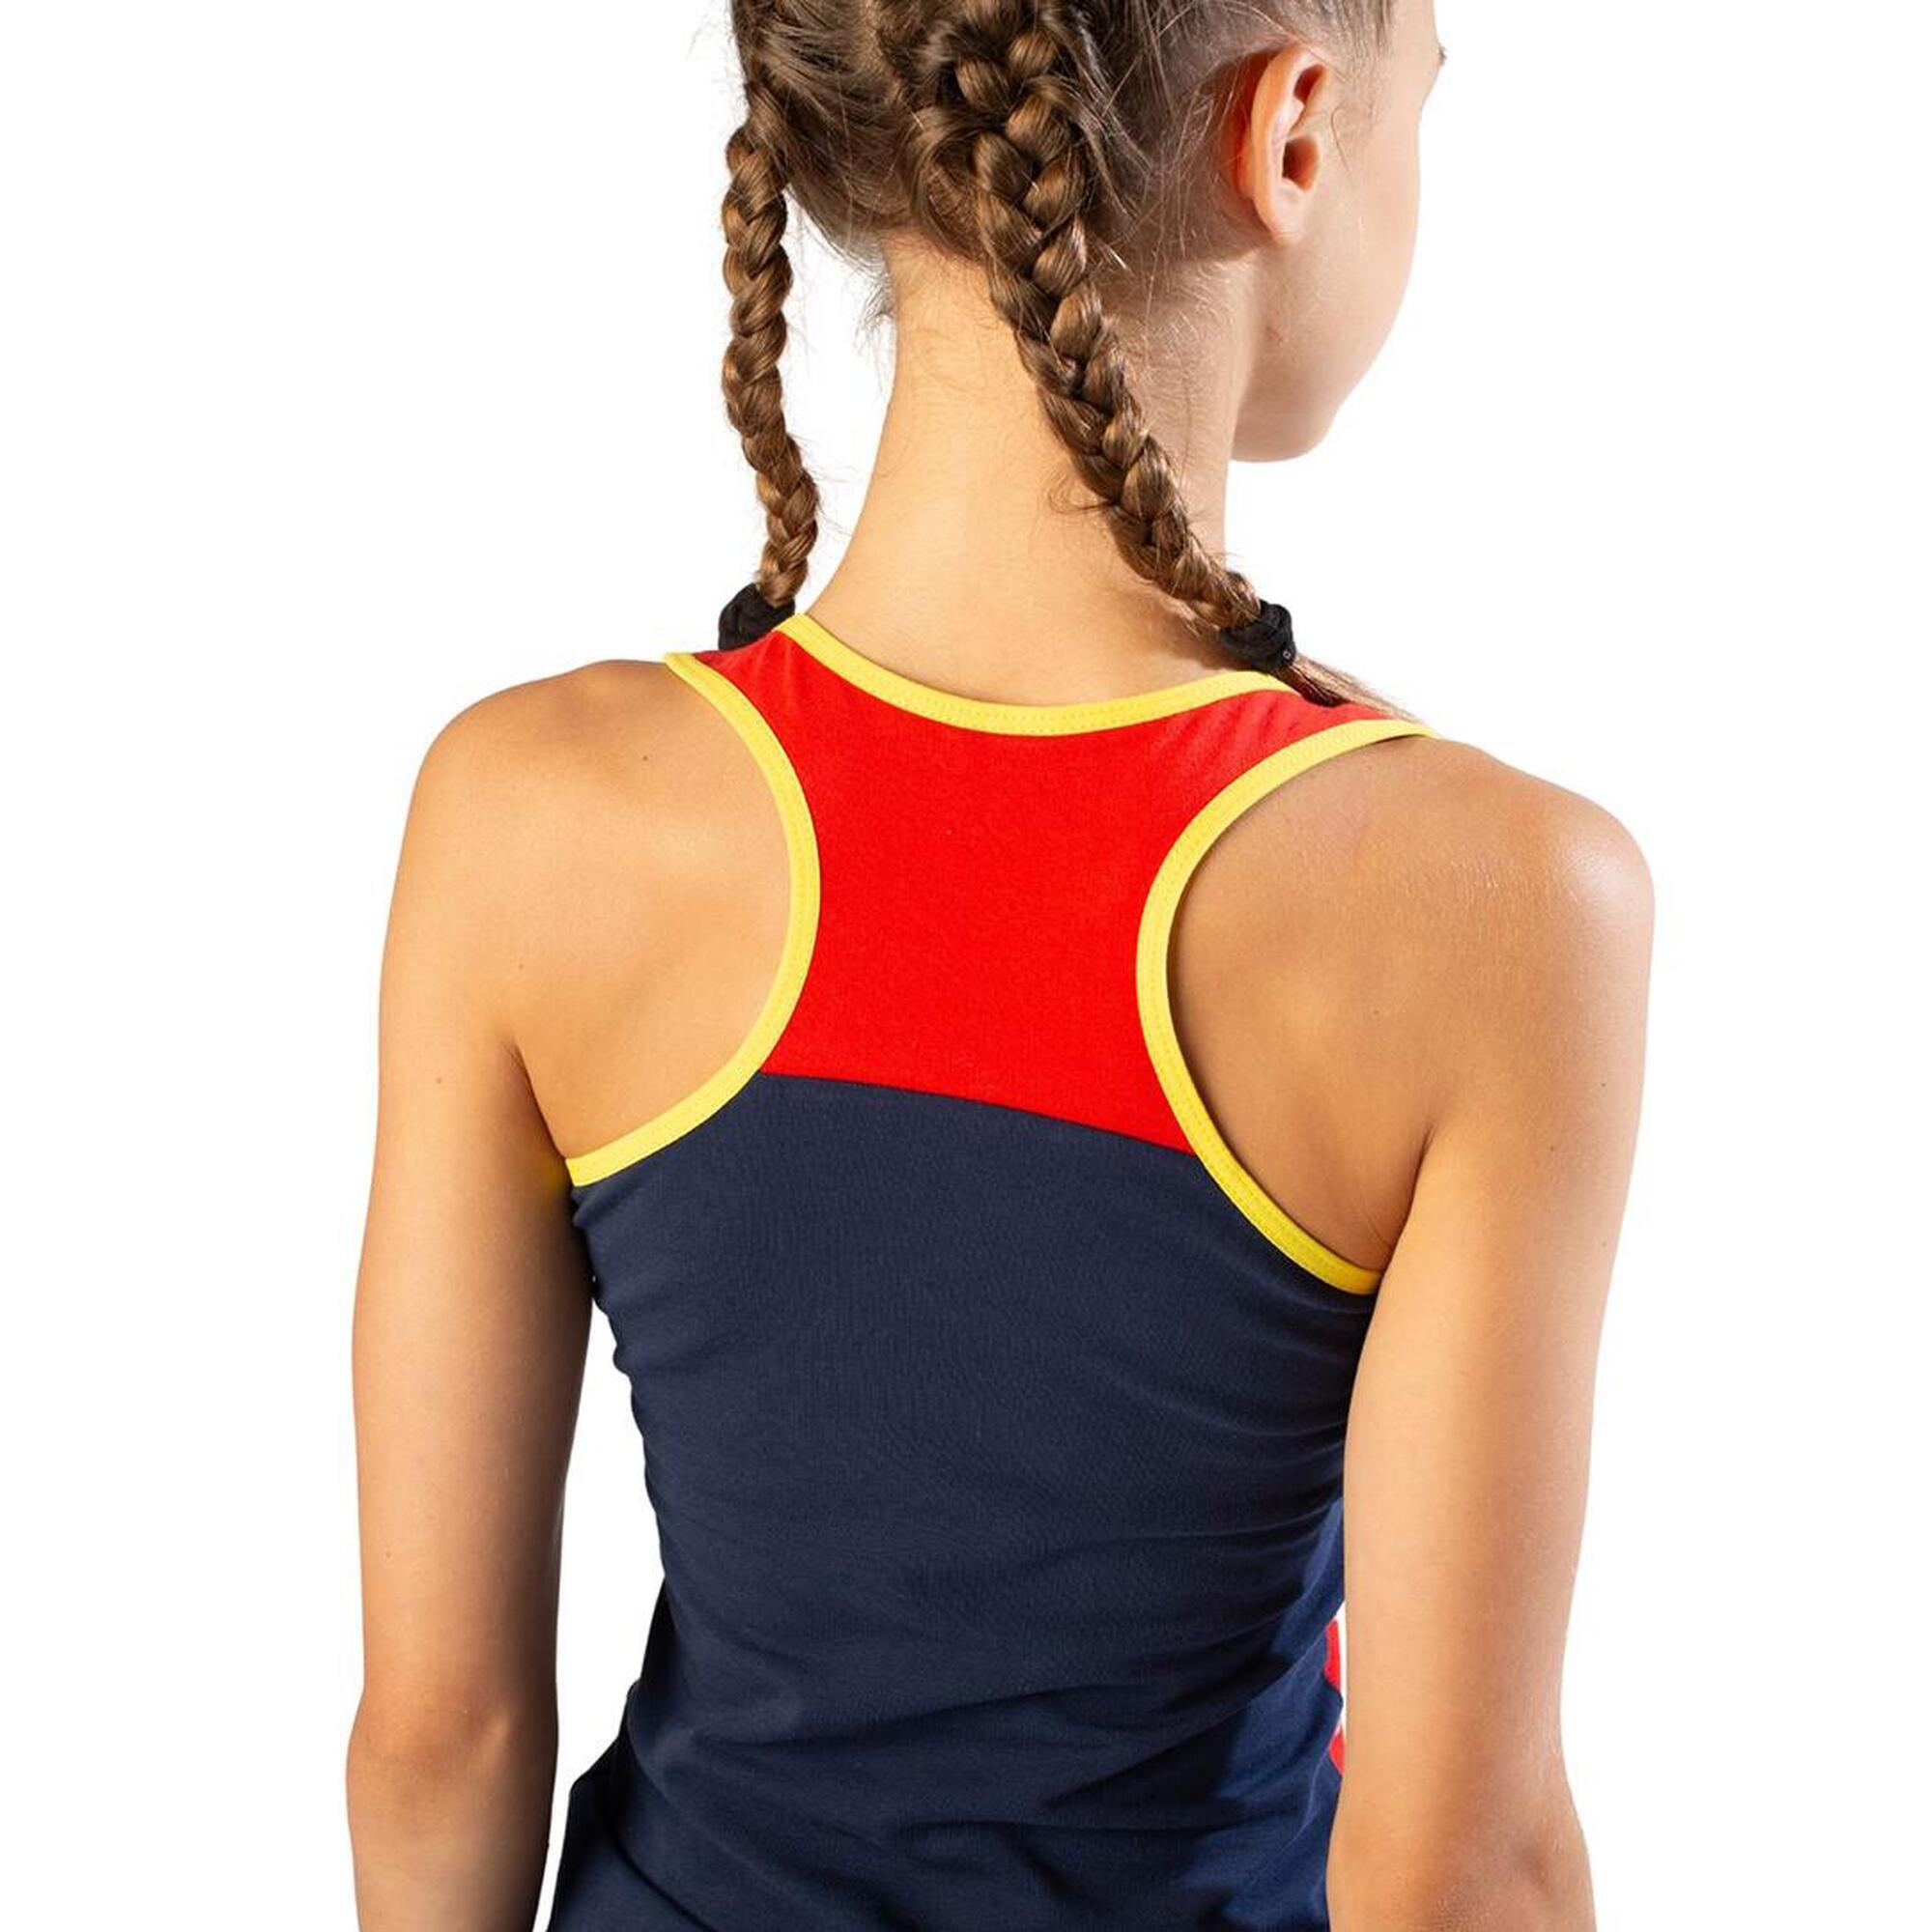 Camiseta Gimnasia Dvillena Tirantes Con Espalda de Nadador España